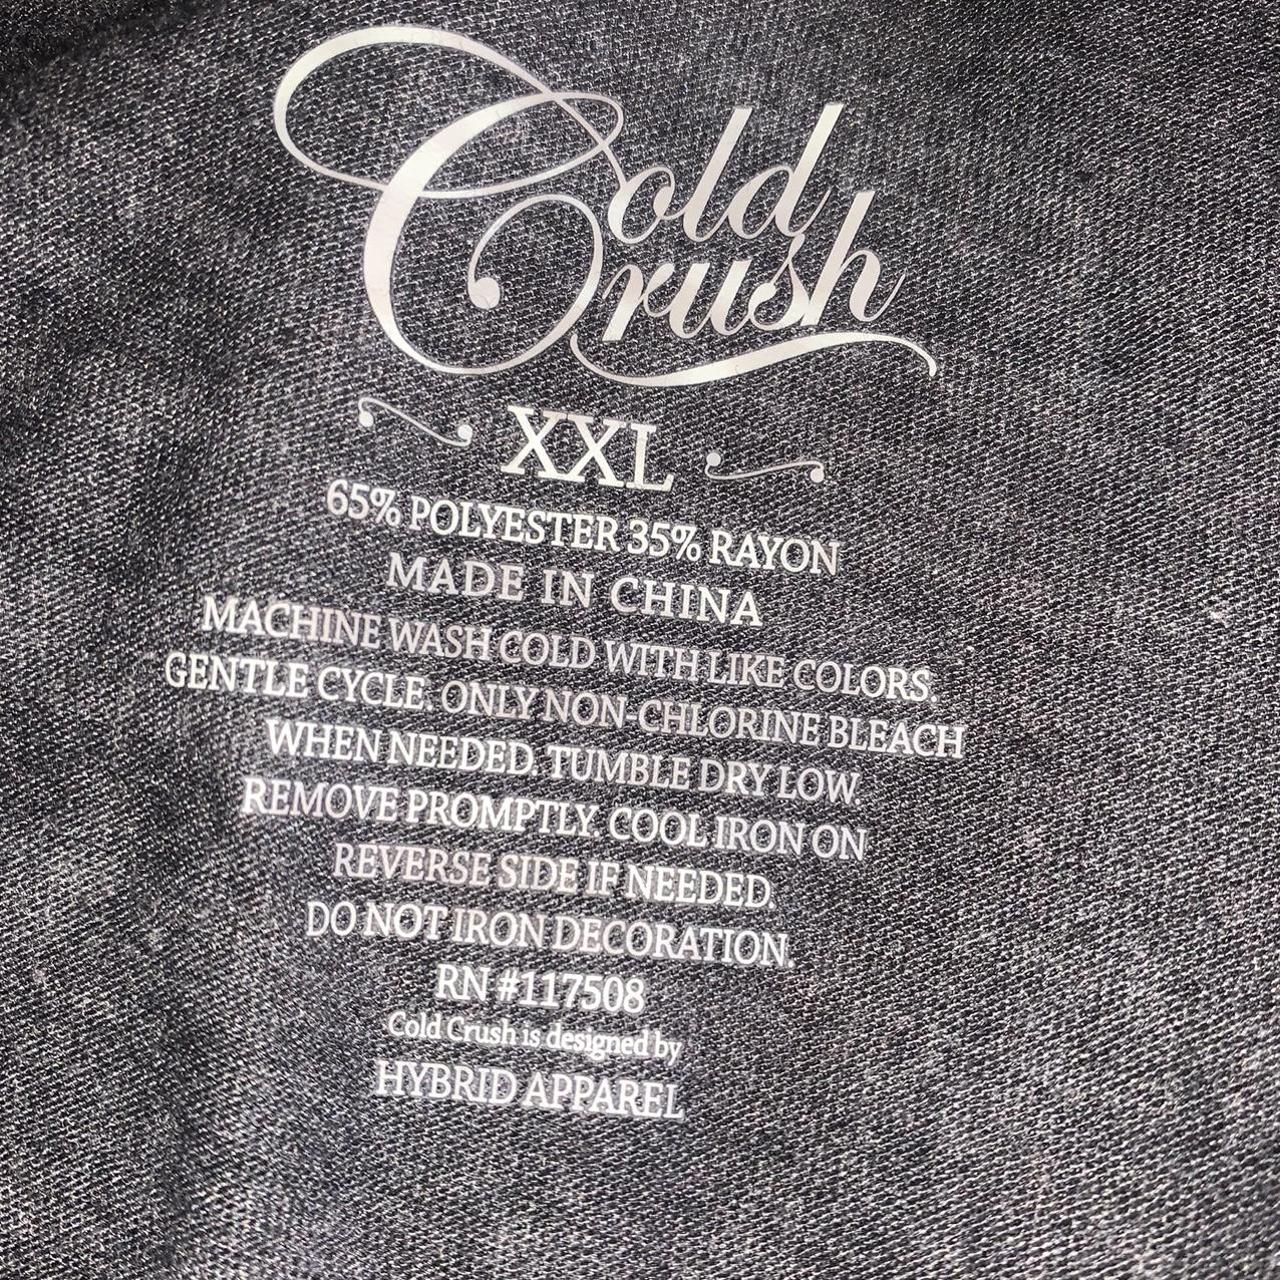 Cold Crush Women's T-shirt (4)